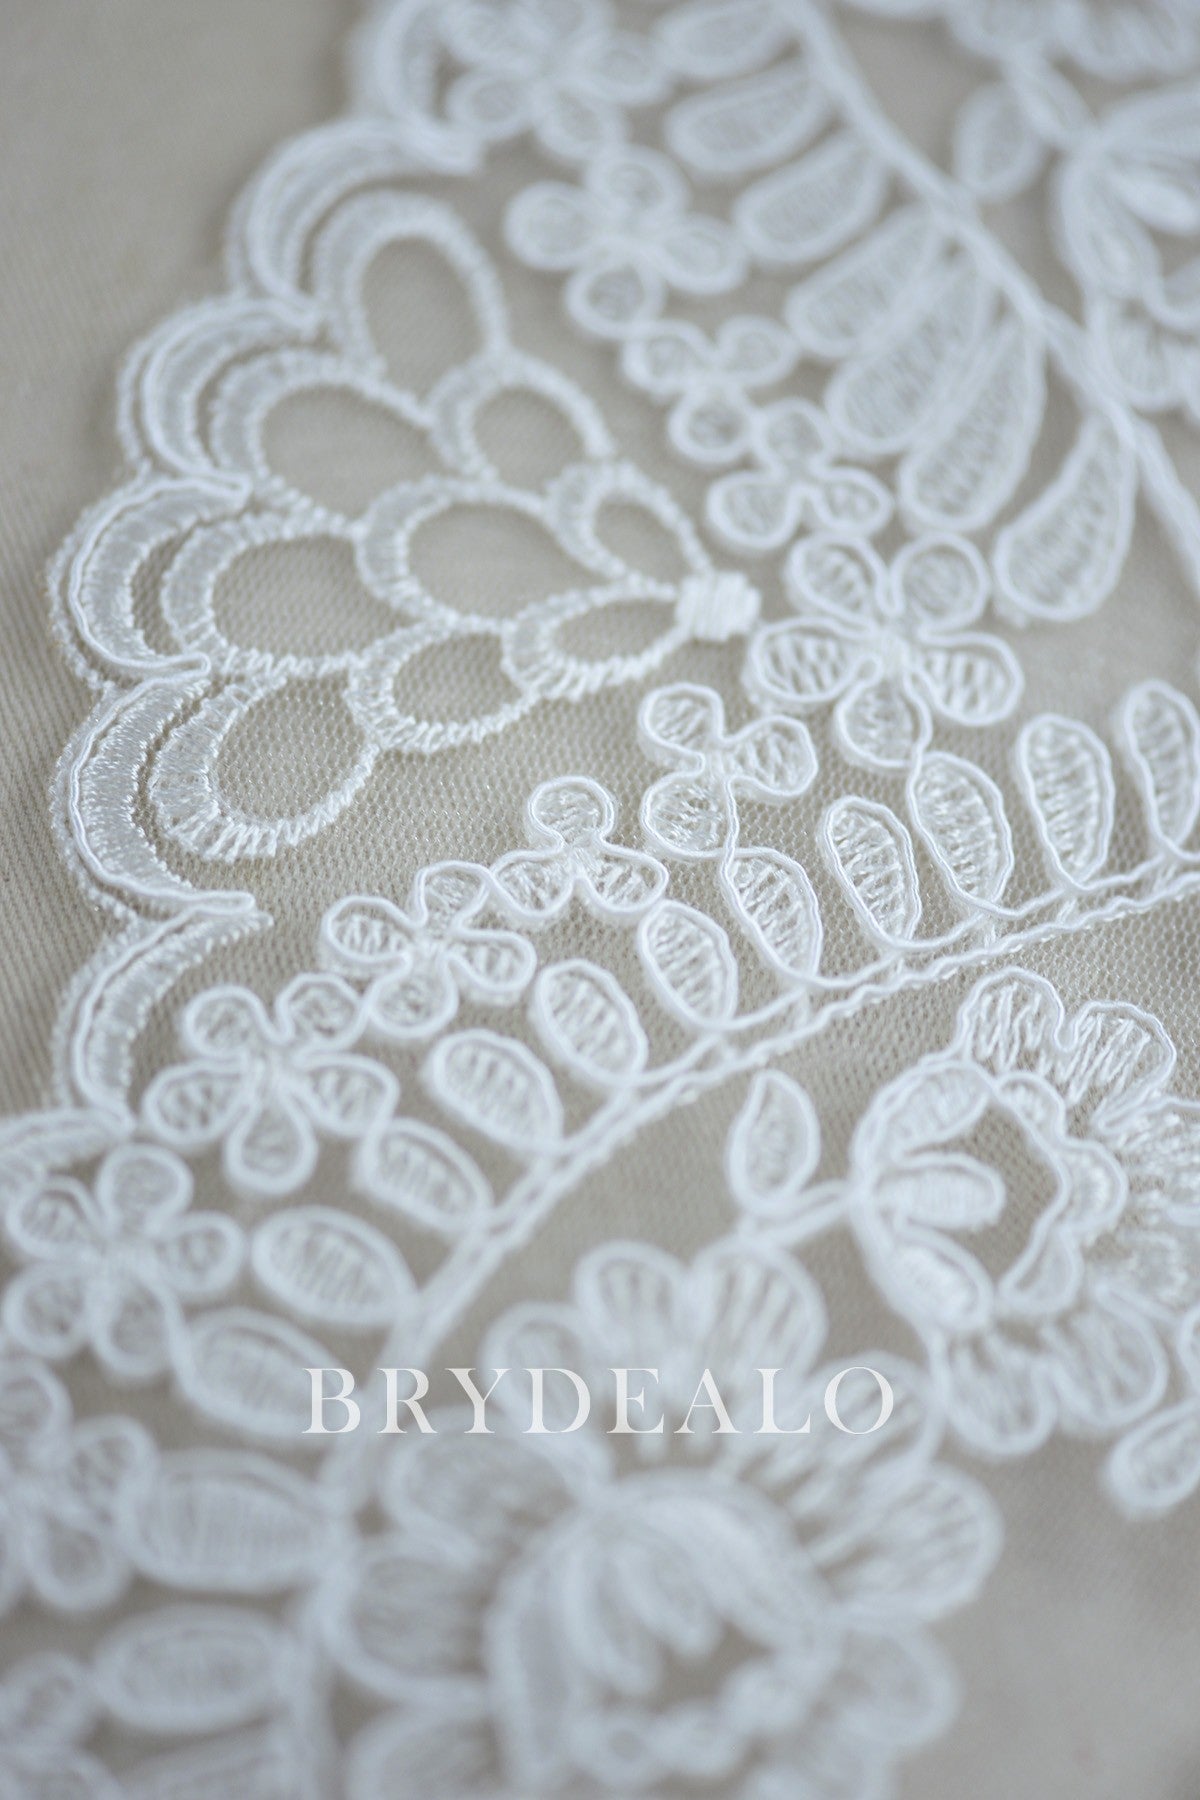 Symmetrical Curved Bridal Lace Trim